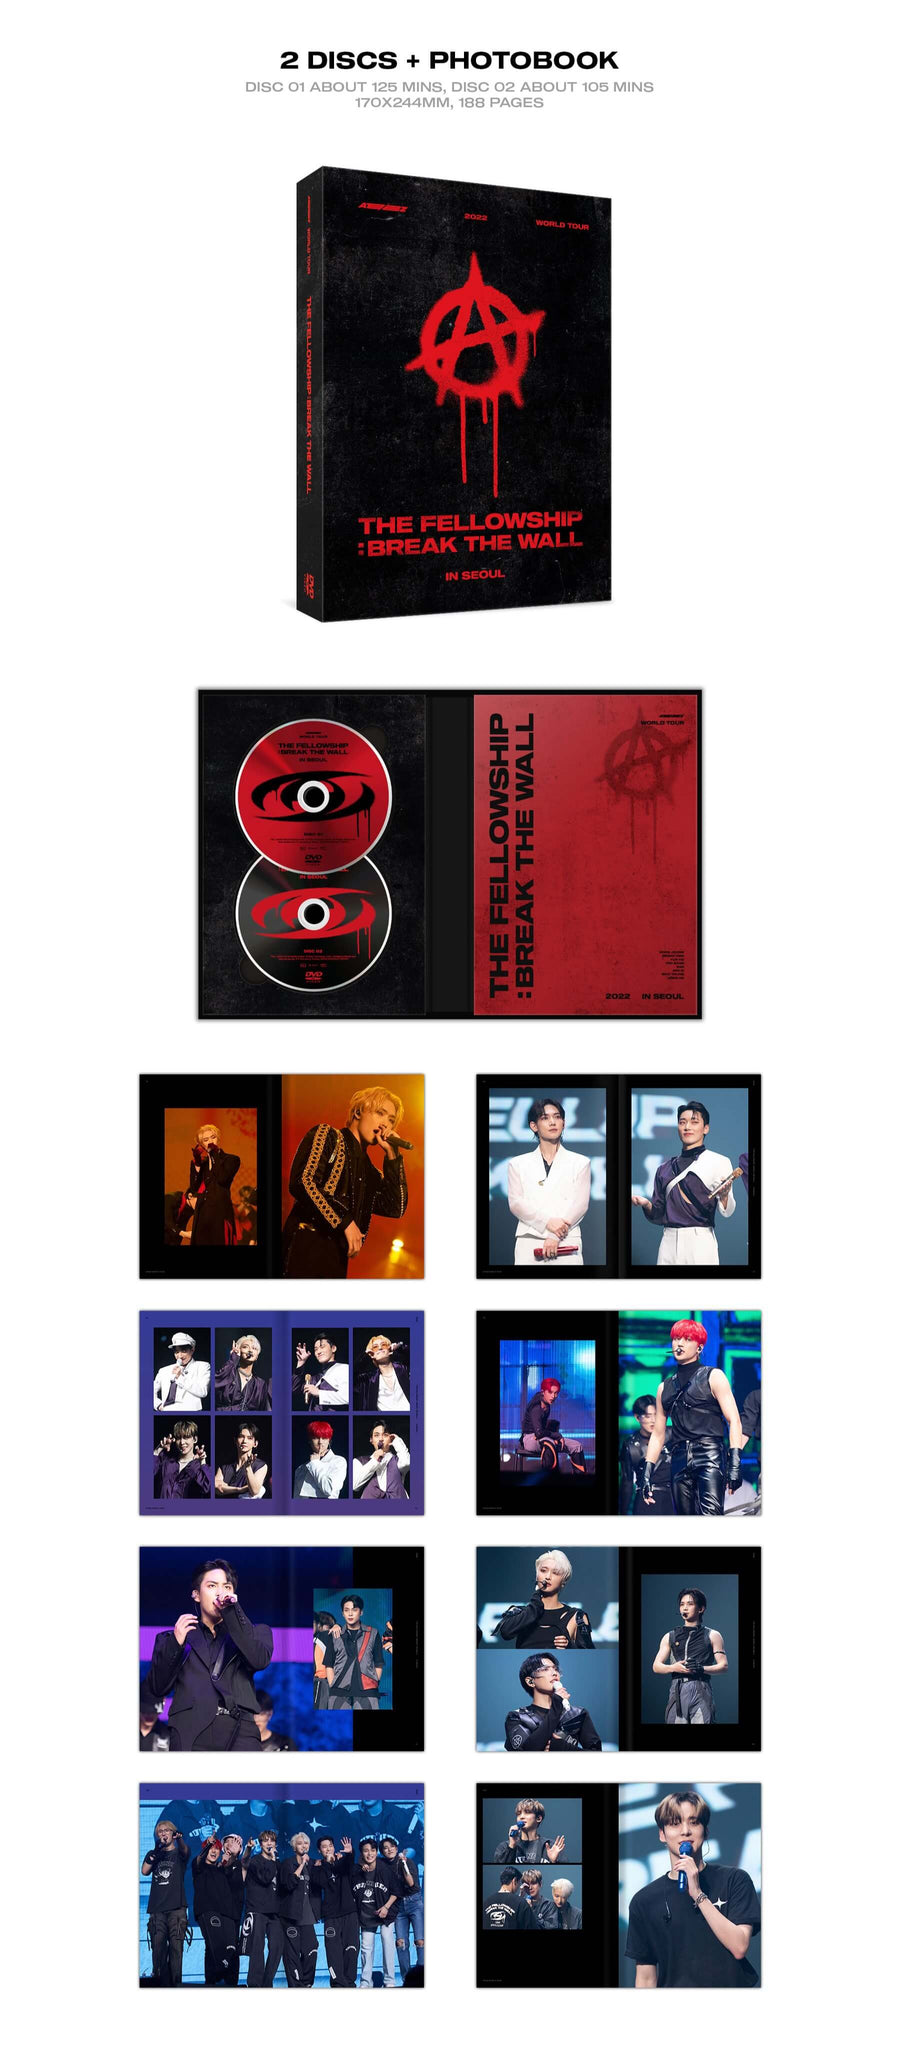 ATEEZ THE FELLOWSHIP : BREAK THE WALL IN SEOUL DVD 2 Discs Photobook